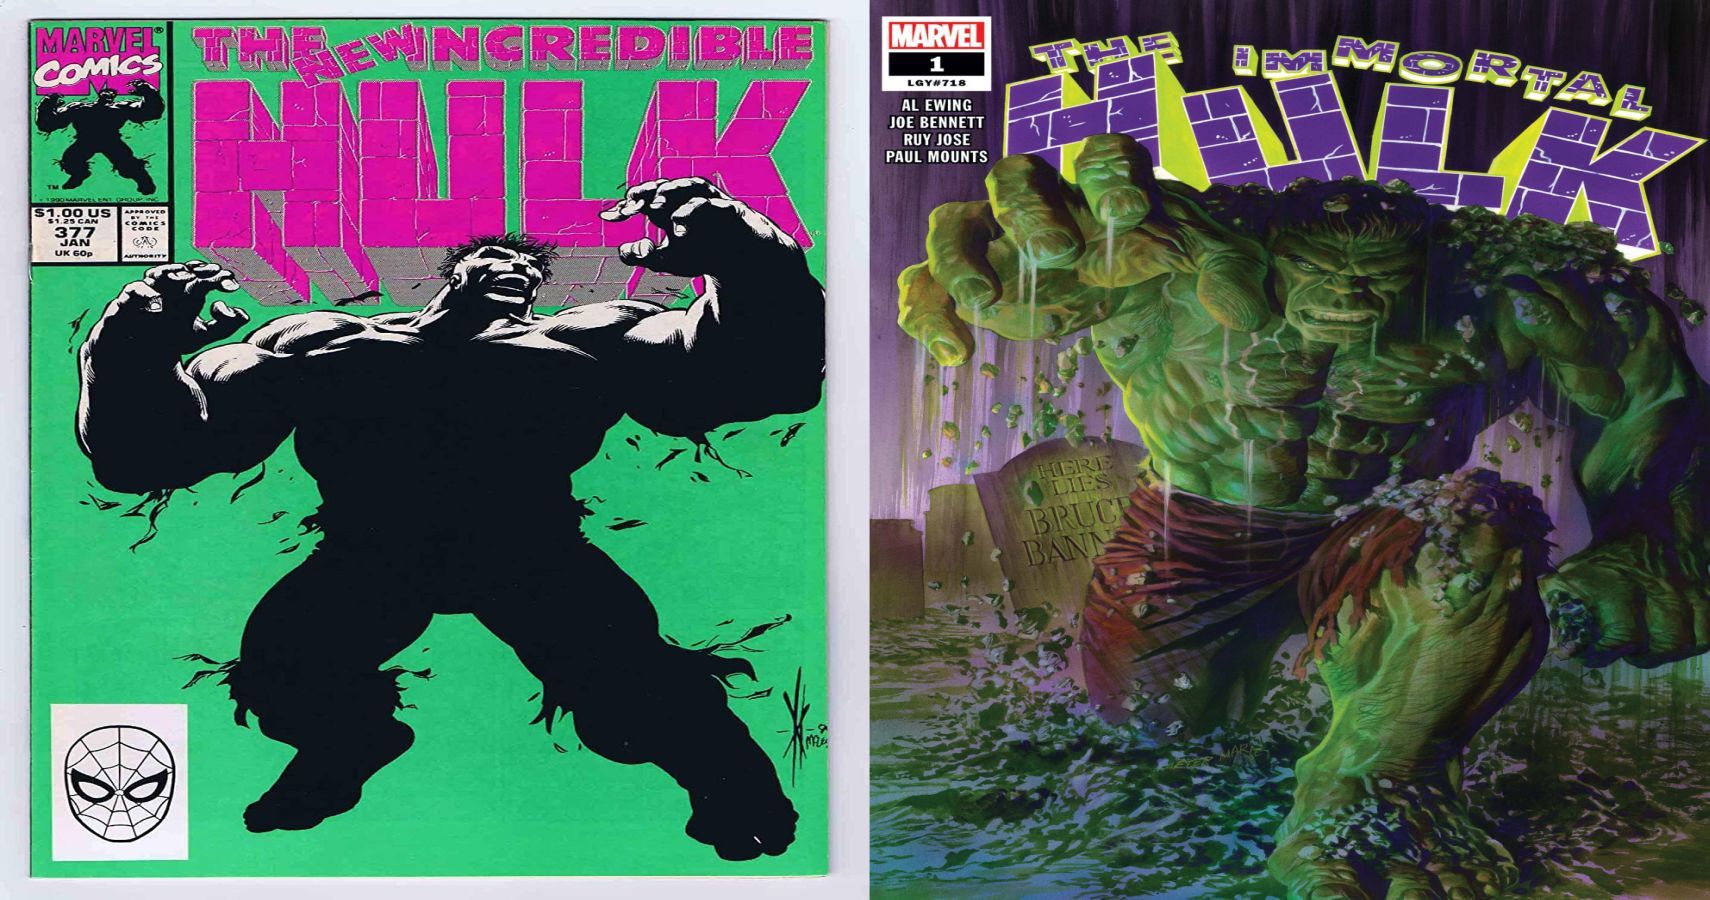 Peter David's Hulk #377 and Ewing's Immortal Hulk #1